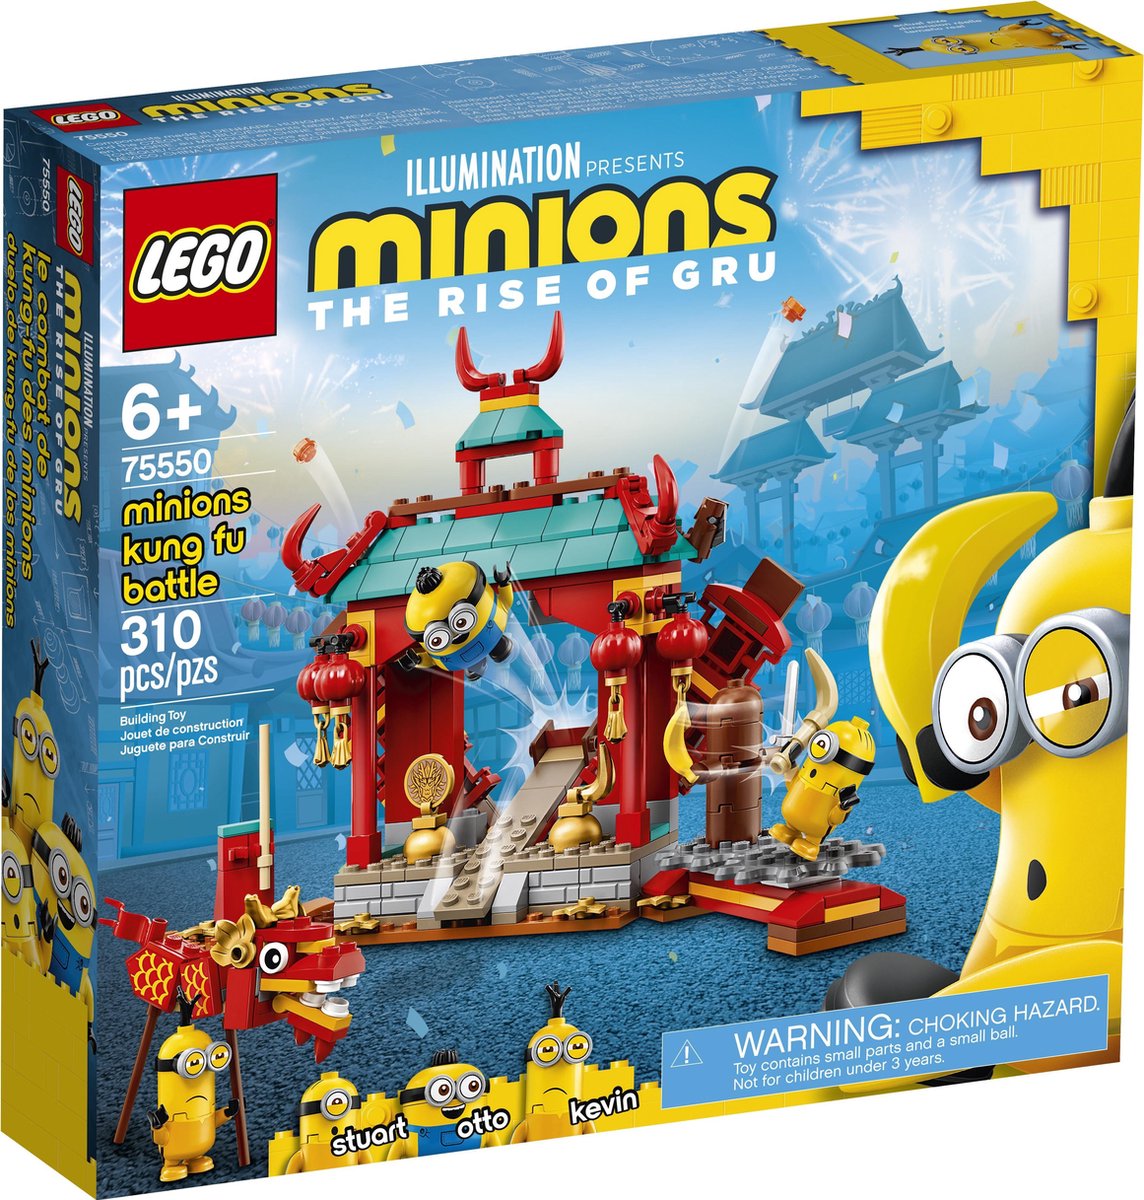 LEGO Minion Minions kungfugevecht - 75550